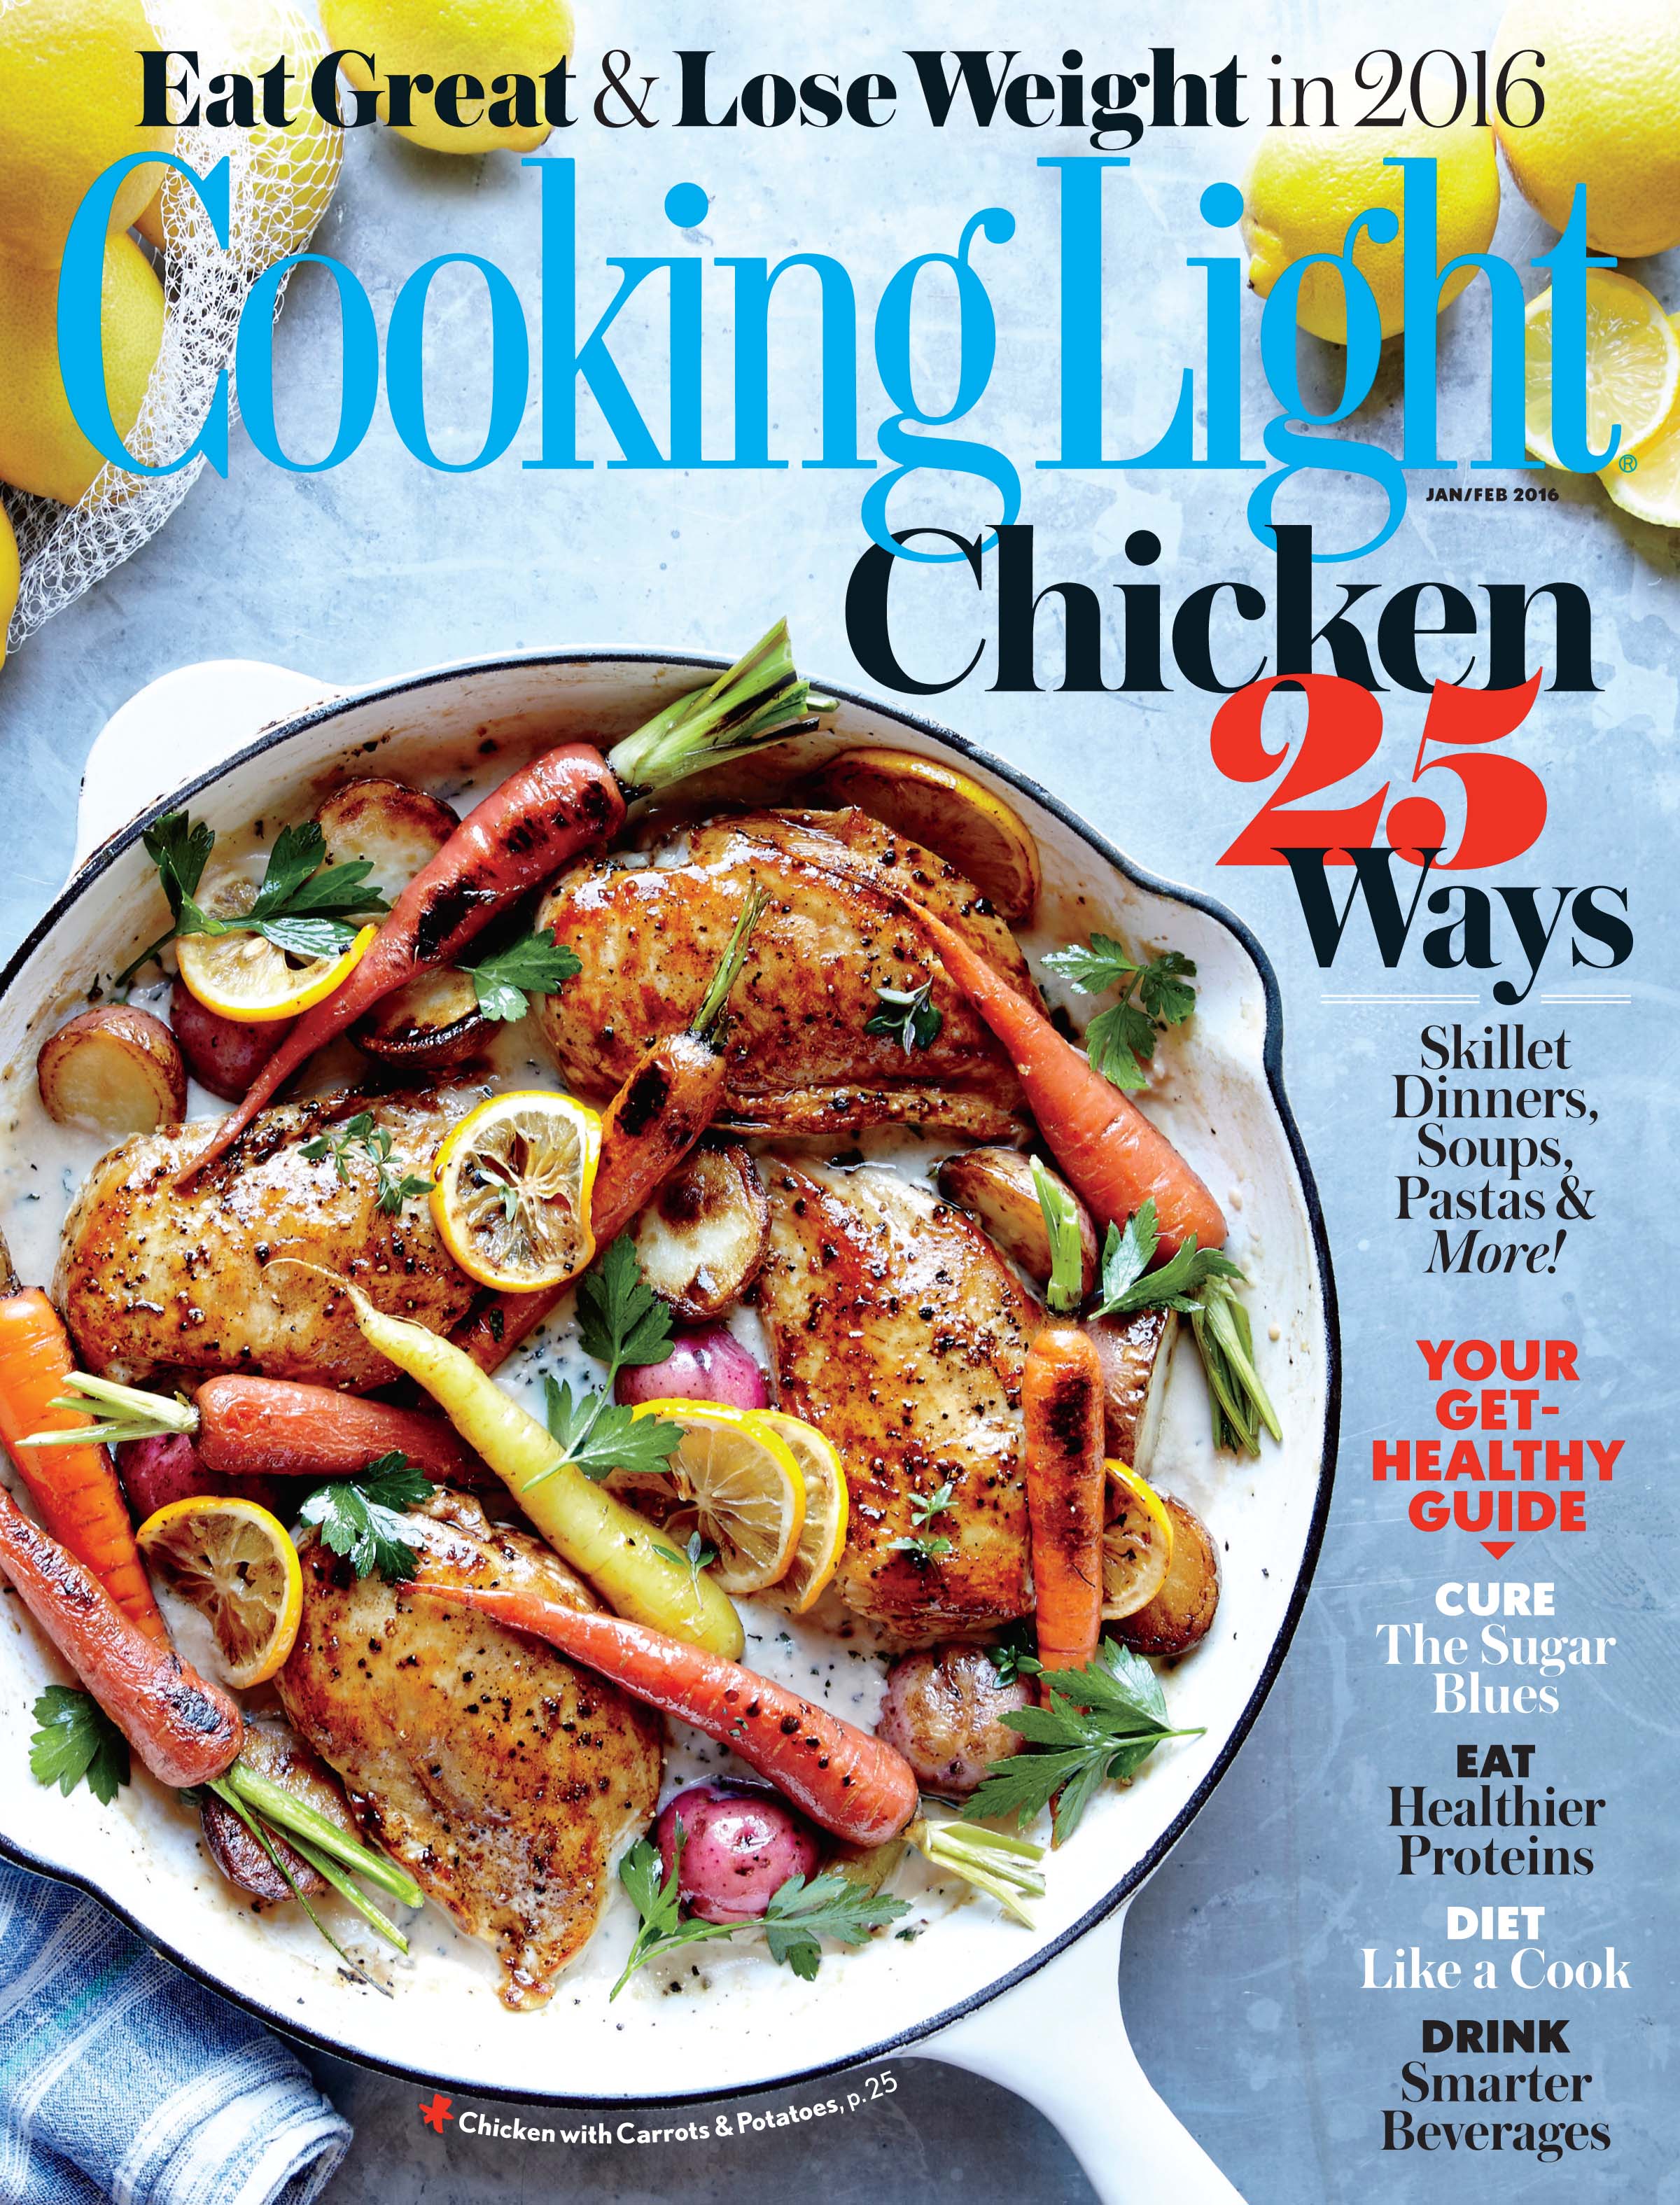 Cooking Light subscription. Cook Light. Cook pdf. Pdf cook